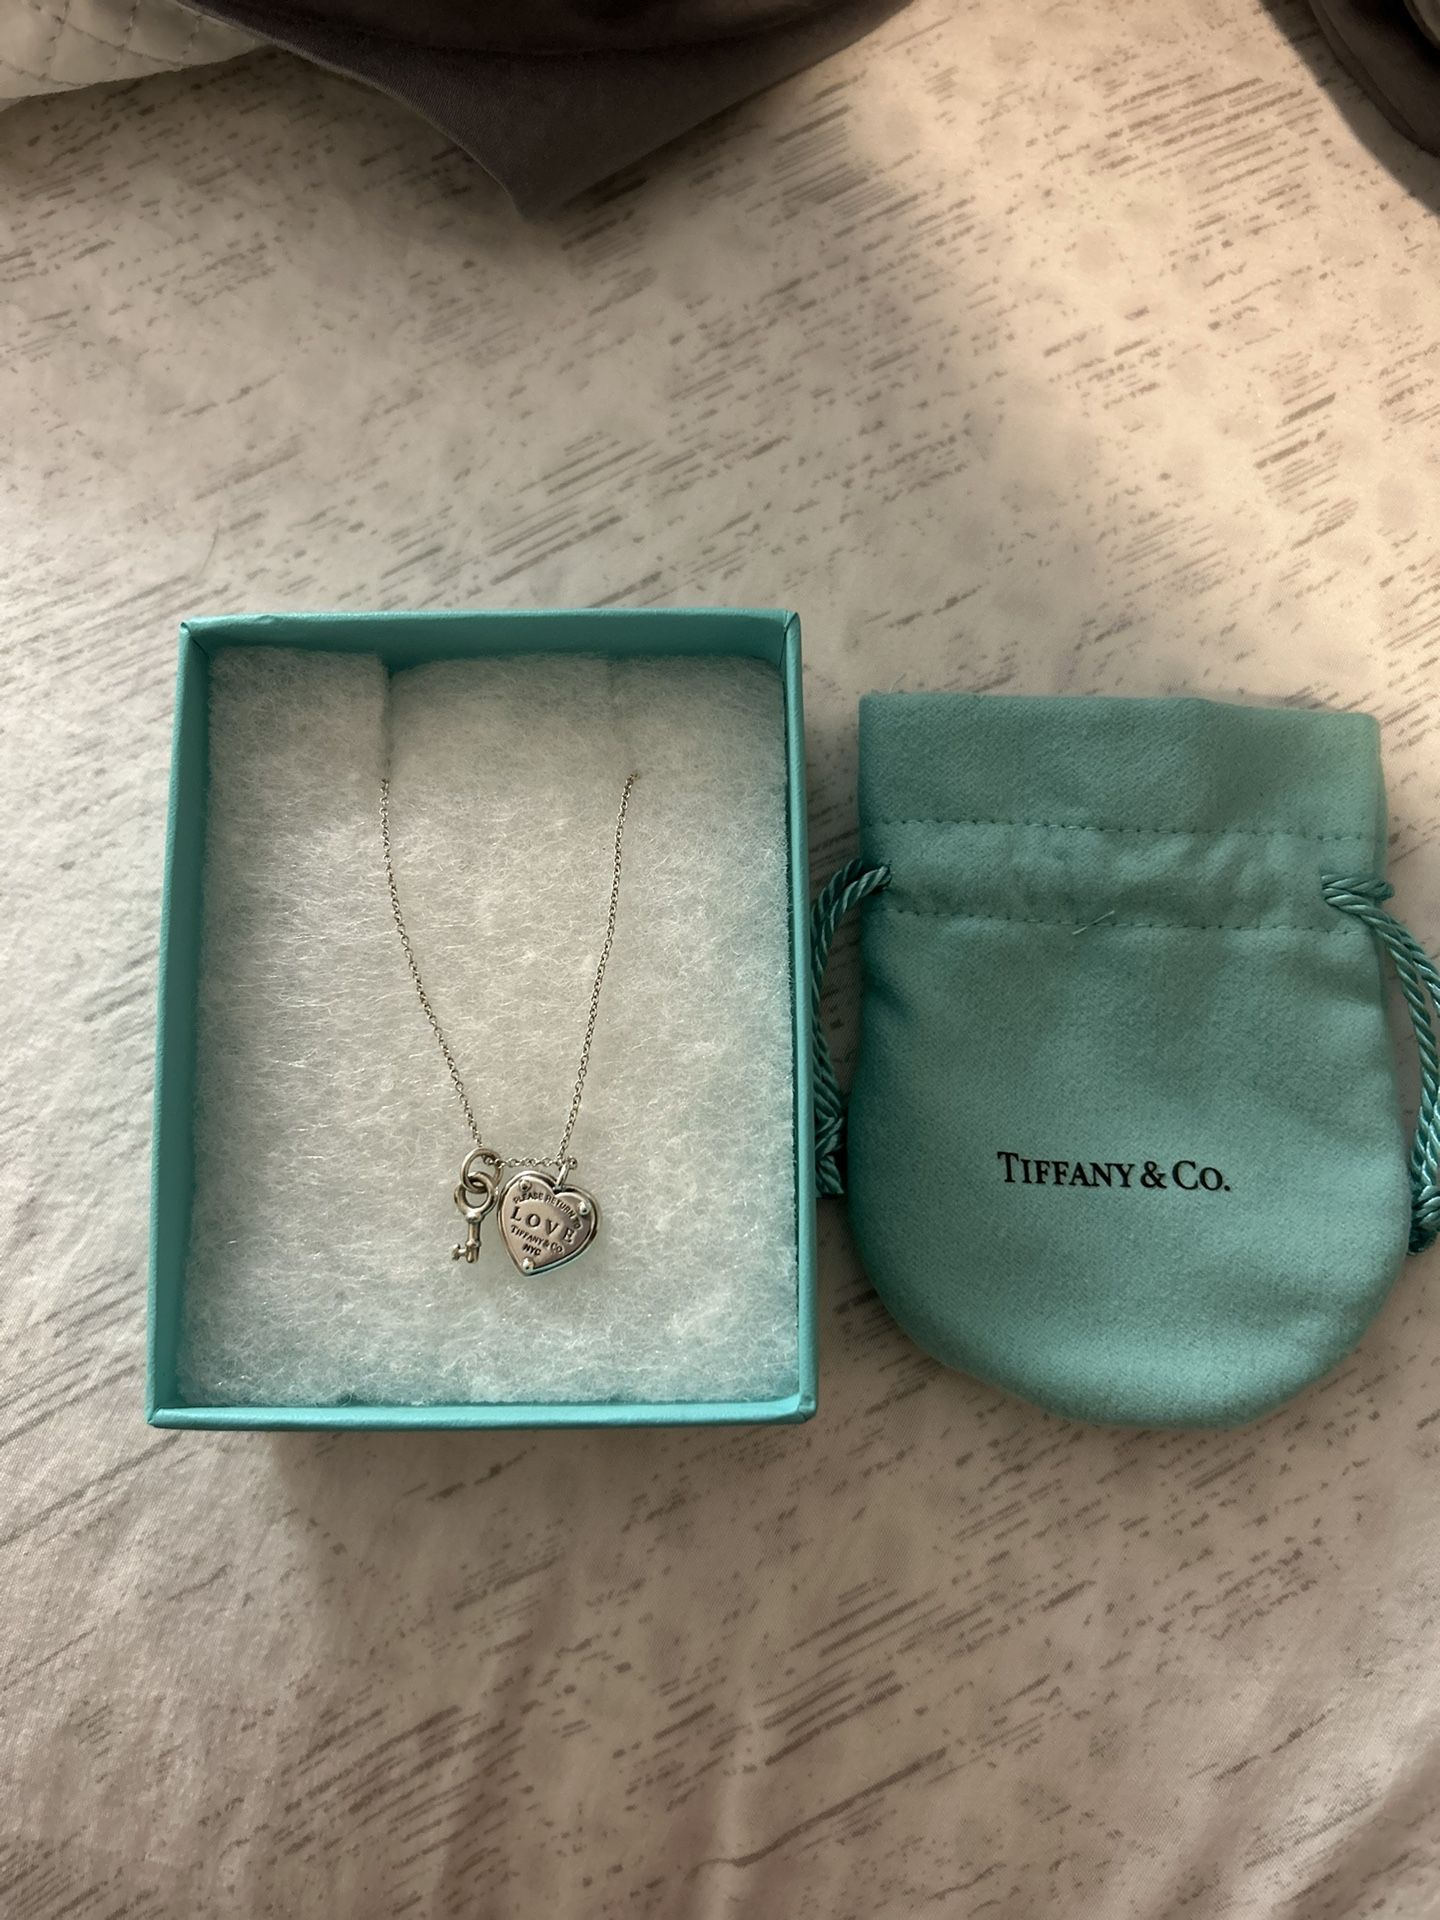 Tiffany & Co - Heart Tag and Key Necklace